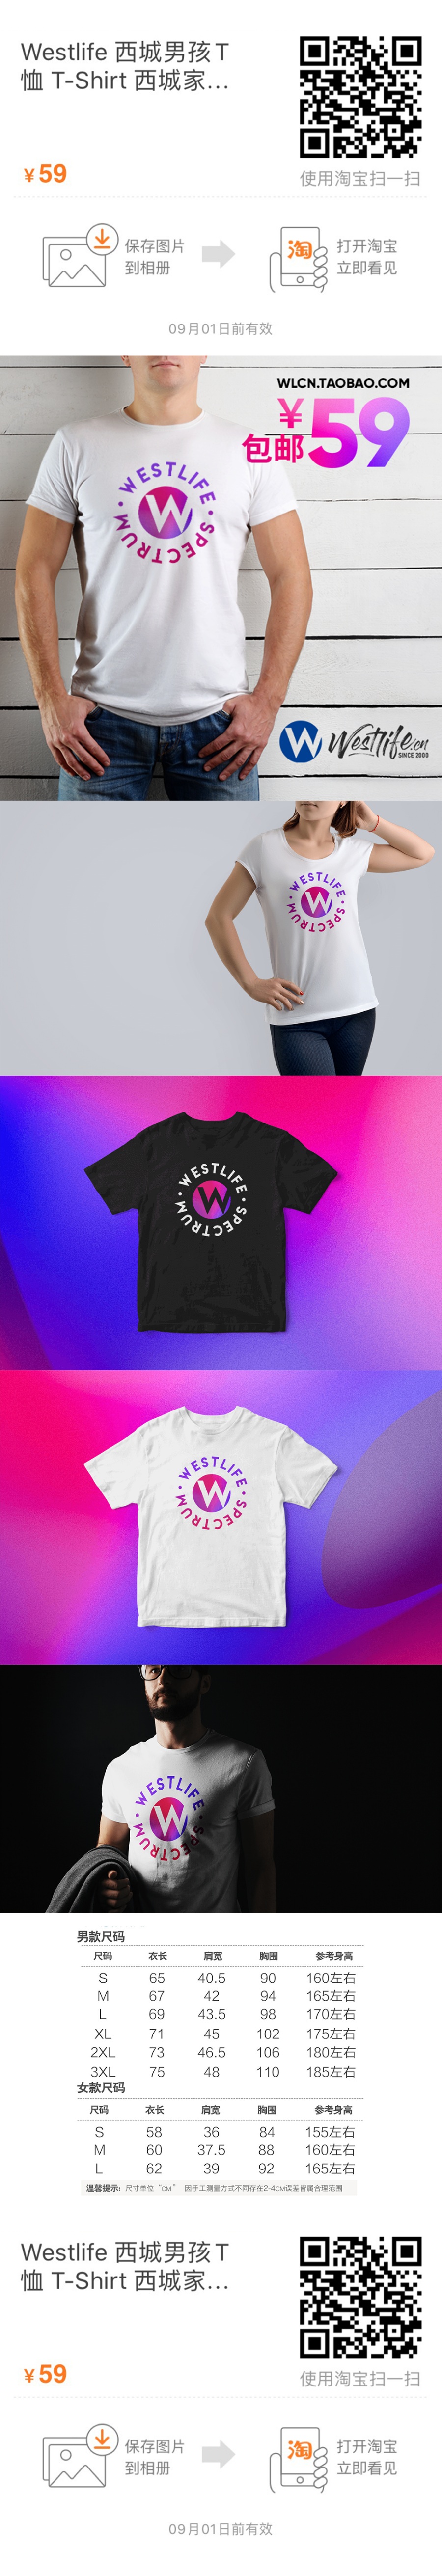 Westlife纪念T恤2019限量款上架啦！